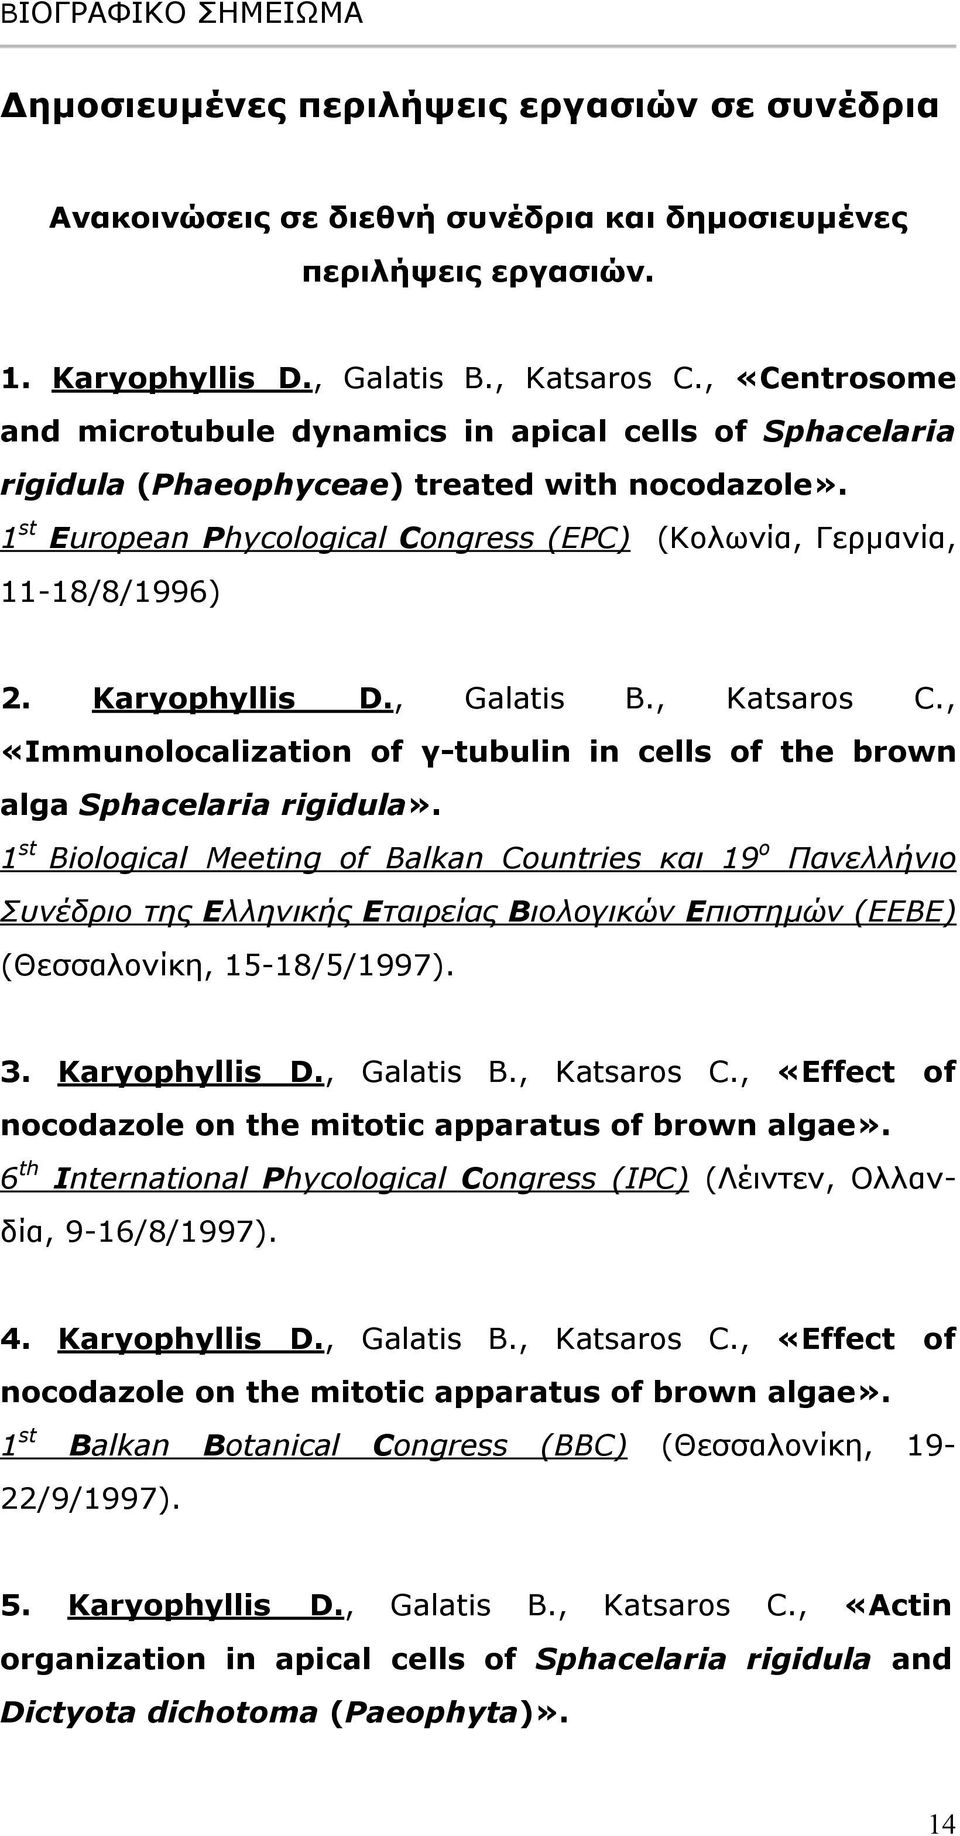 Karyophyllis D., Galatis B., Katsaros C., «Immunolocalization of γ-tubulin in cells of the brown alga Sphacelaria rigidula».